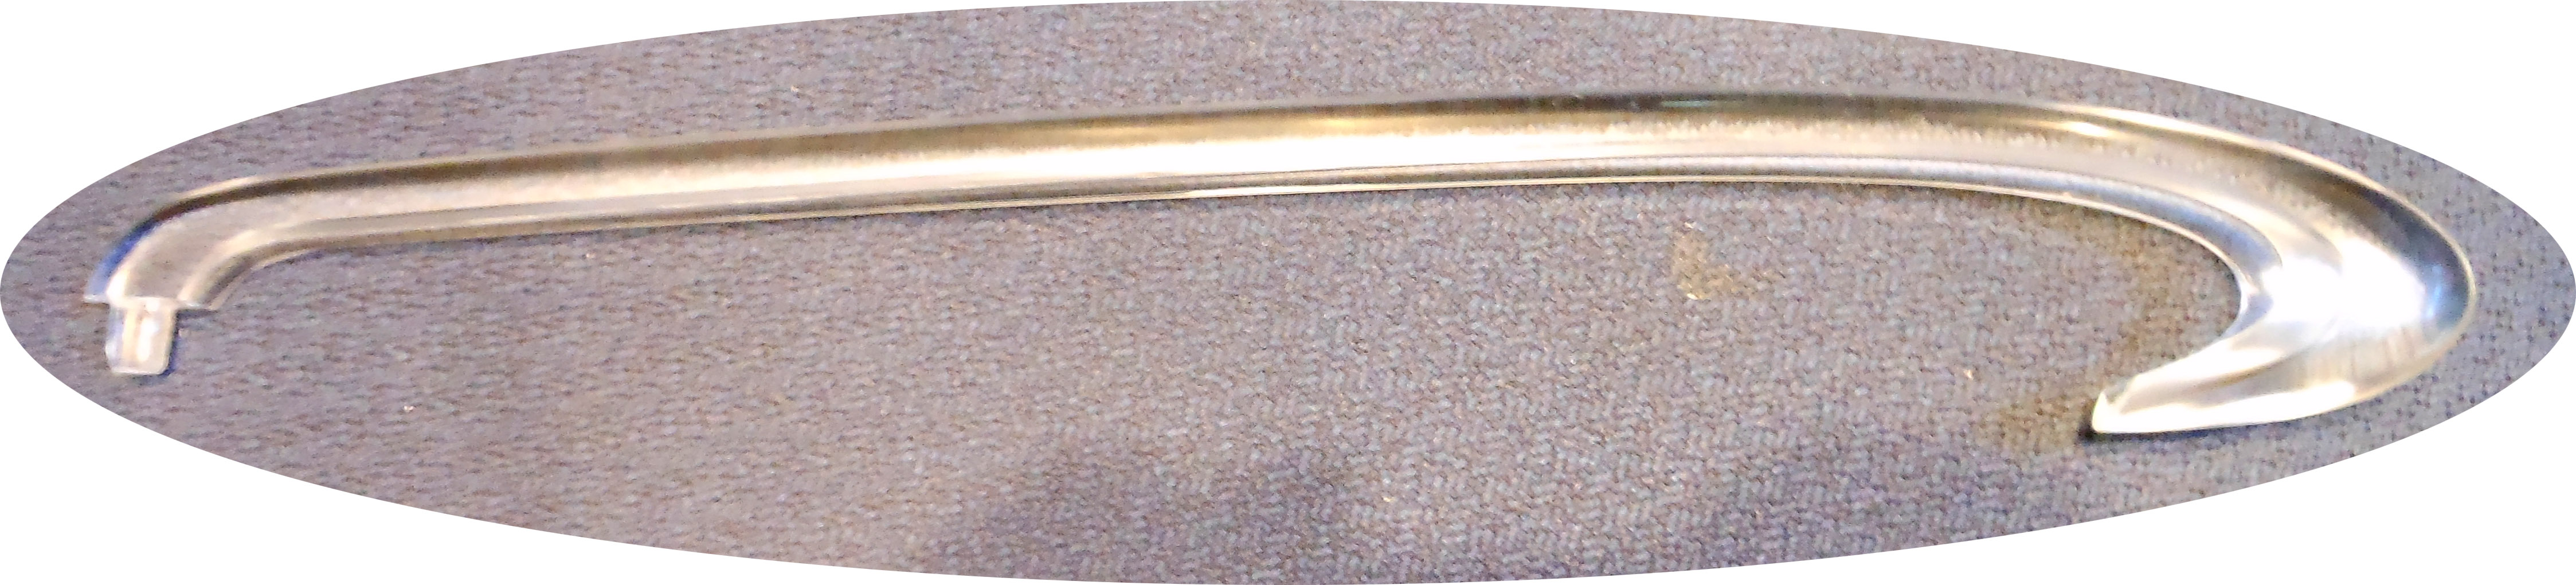 1946 1947 Commodore Hood Ornament blade - Click Image to Close